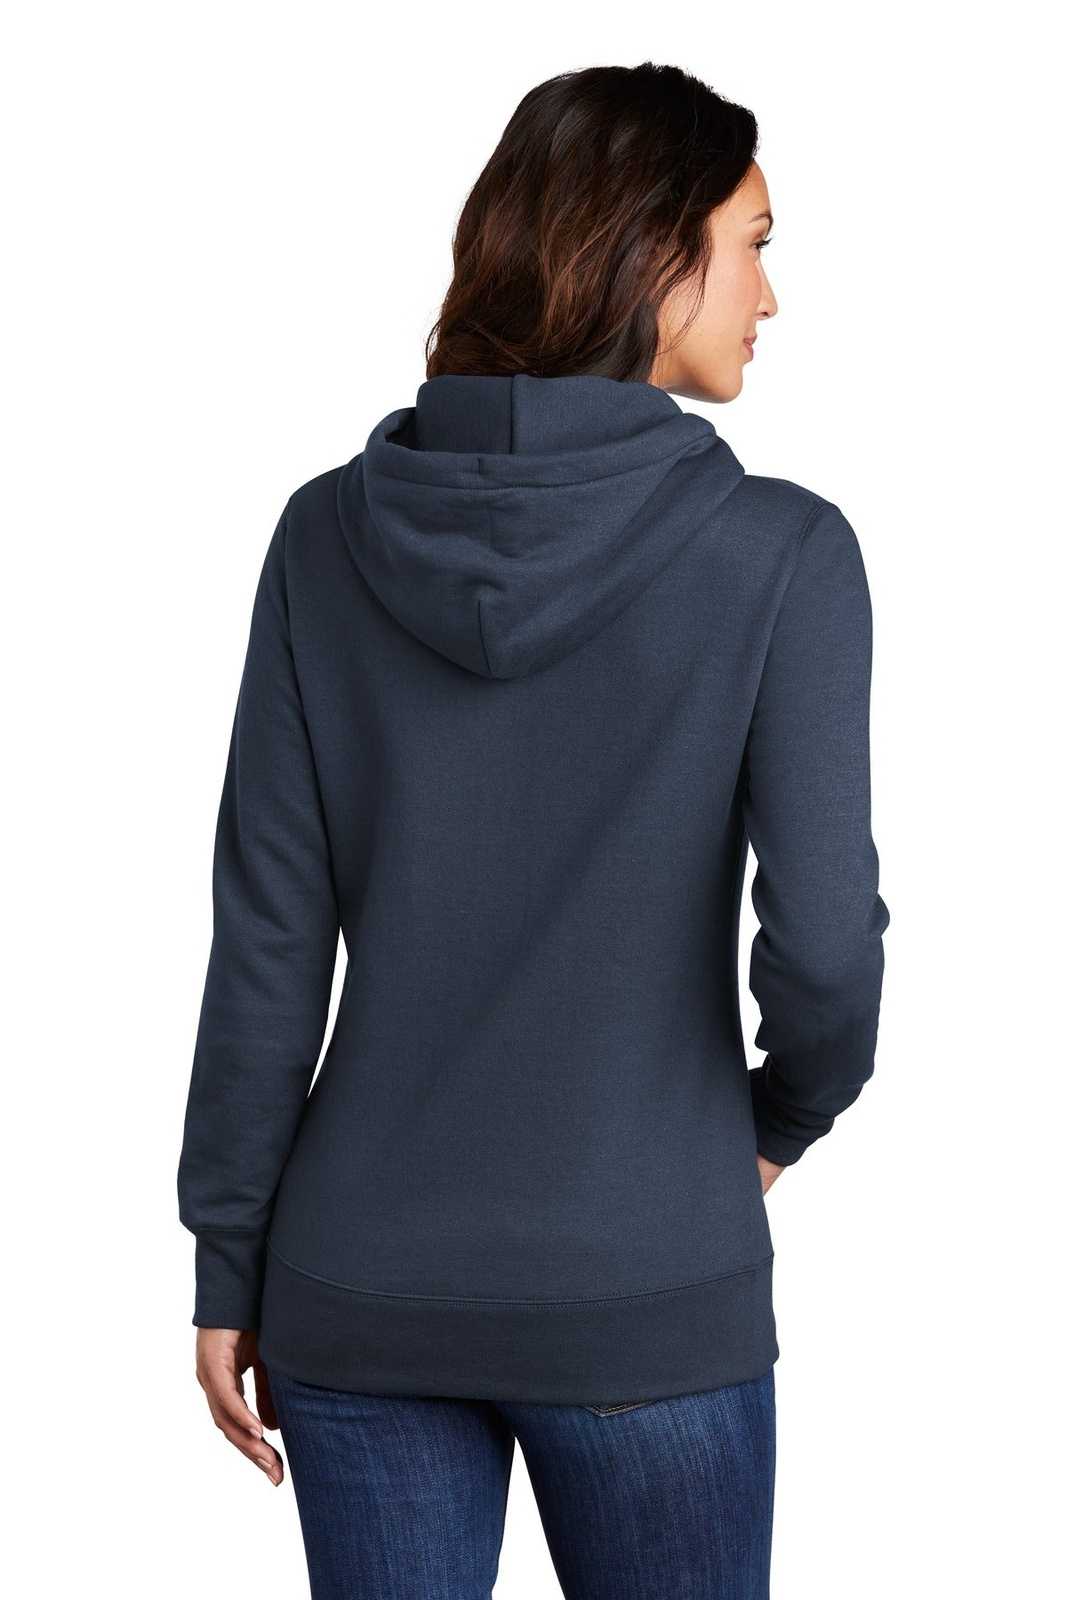 Port &amp; Company LPC78H Ladies Core Fleece Pullover Hooded Sweatshirt - Navy - HIT a Double - 2